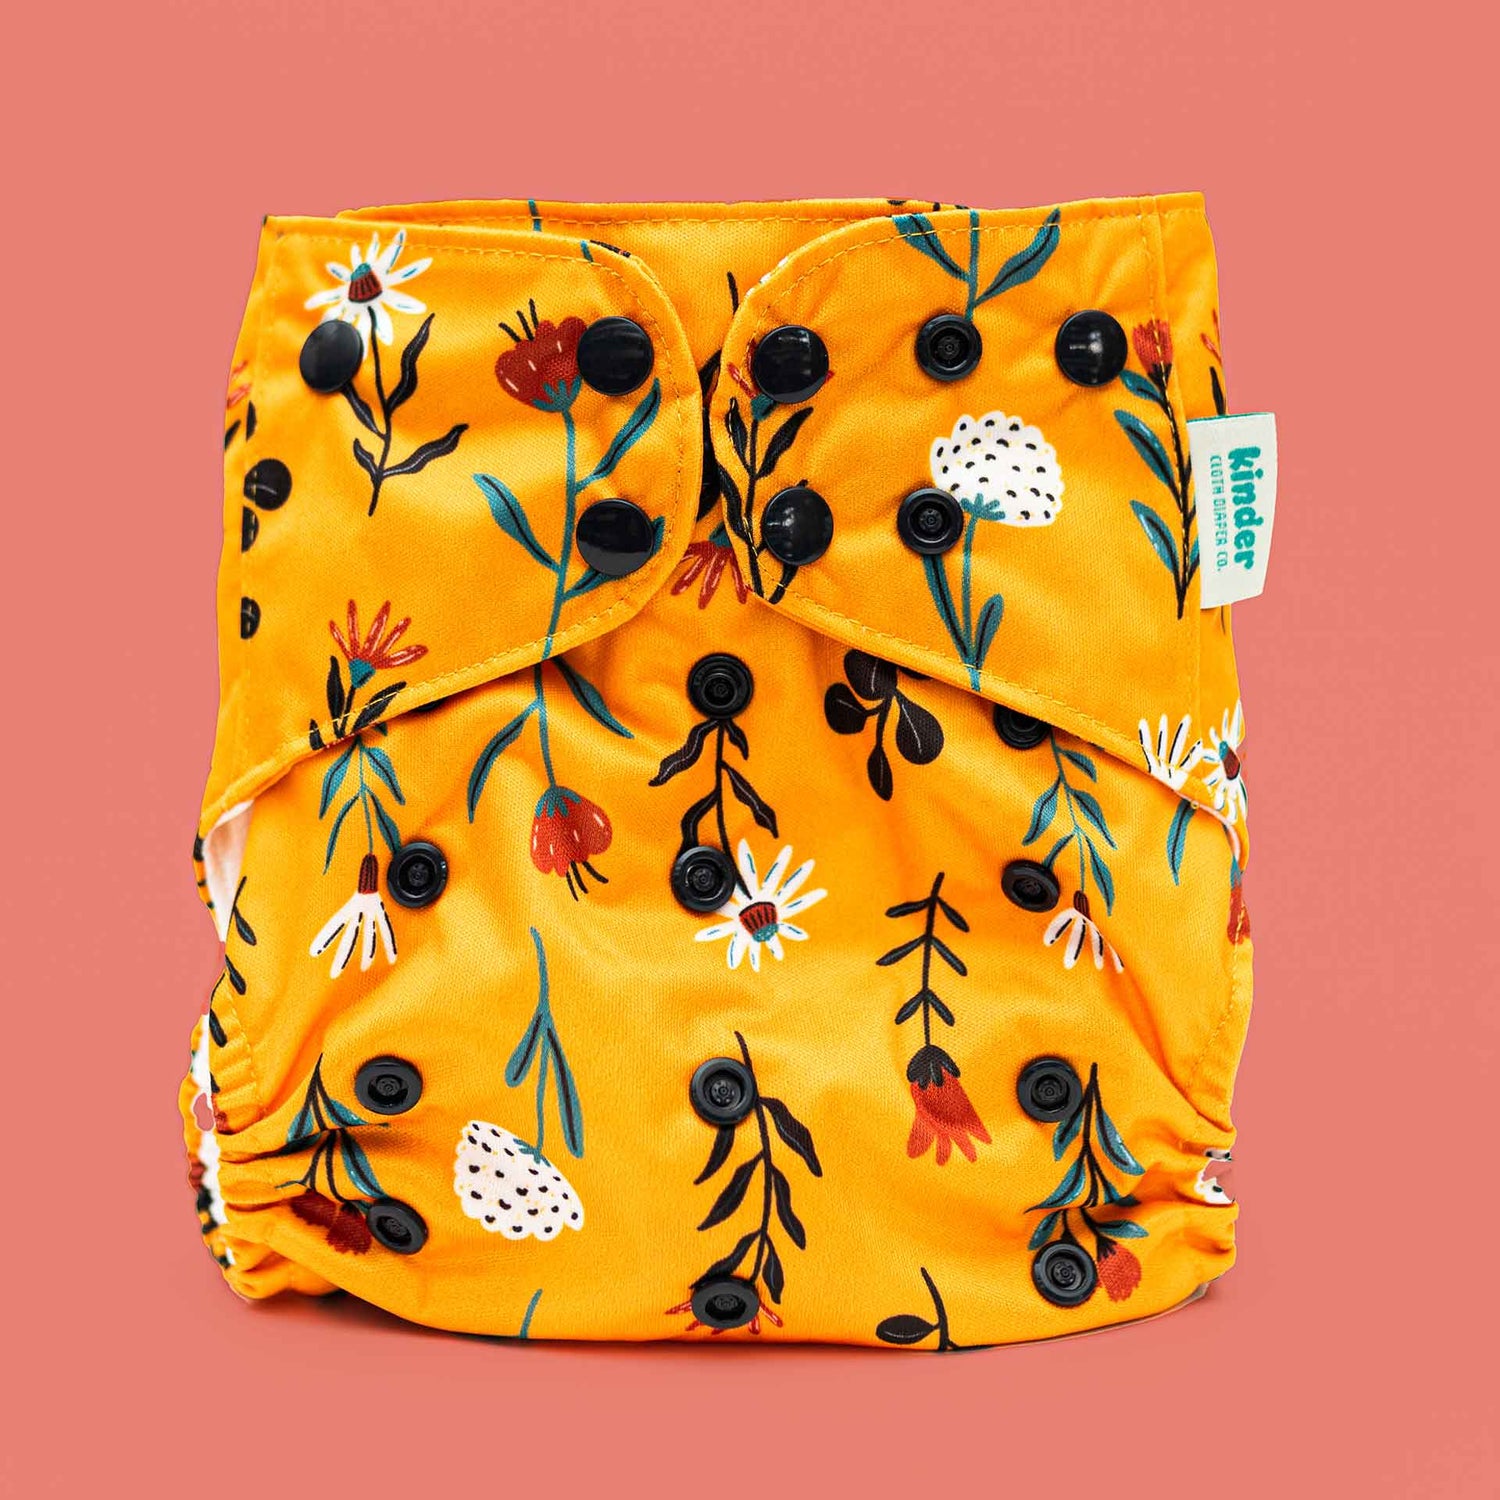 Modern reusable cloth pocket style diaper floral riley kinder cloth diapers pittsbugh gold feminine gender neutral best